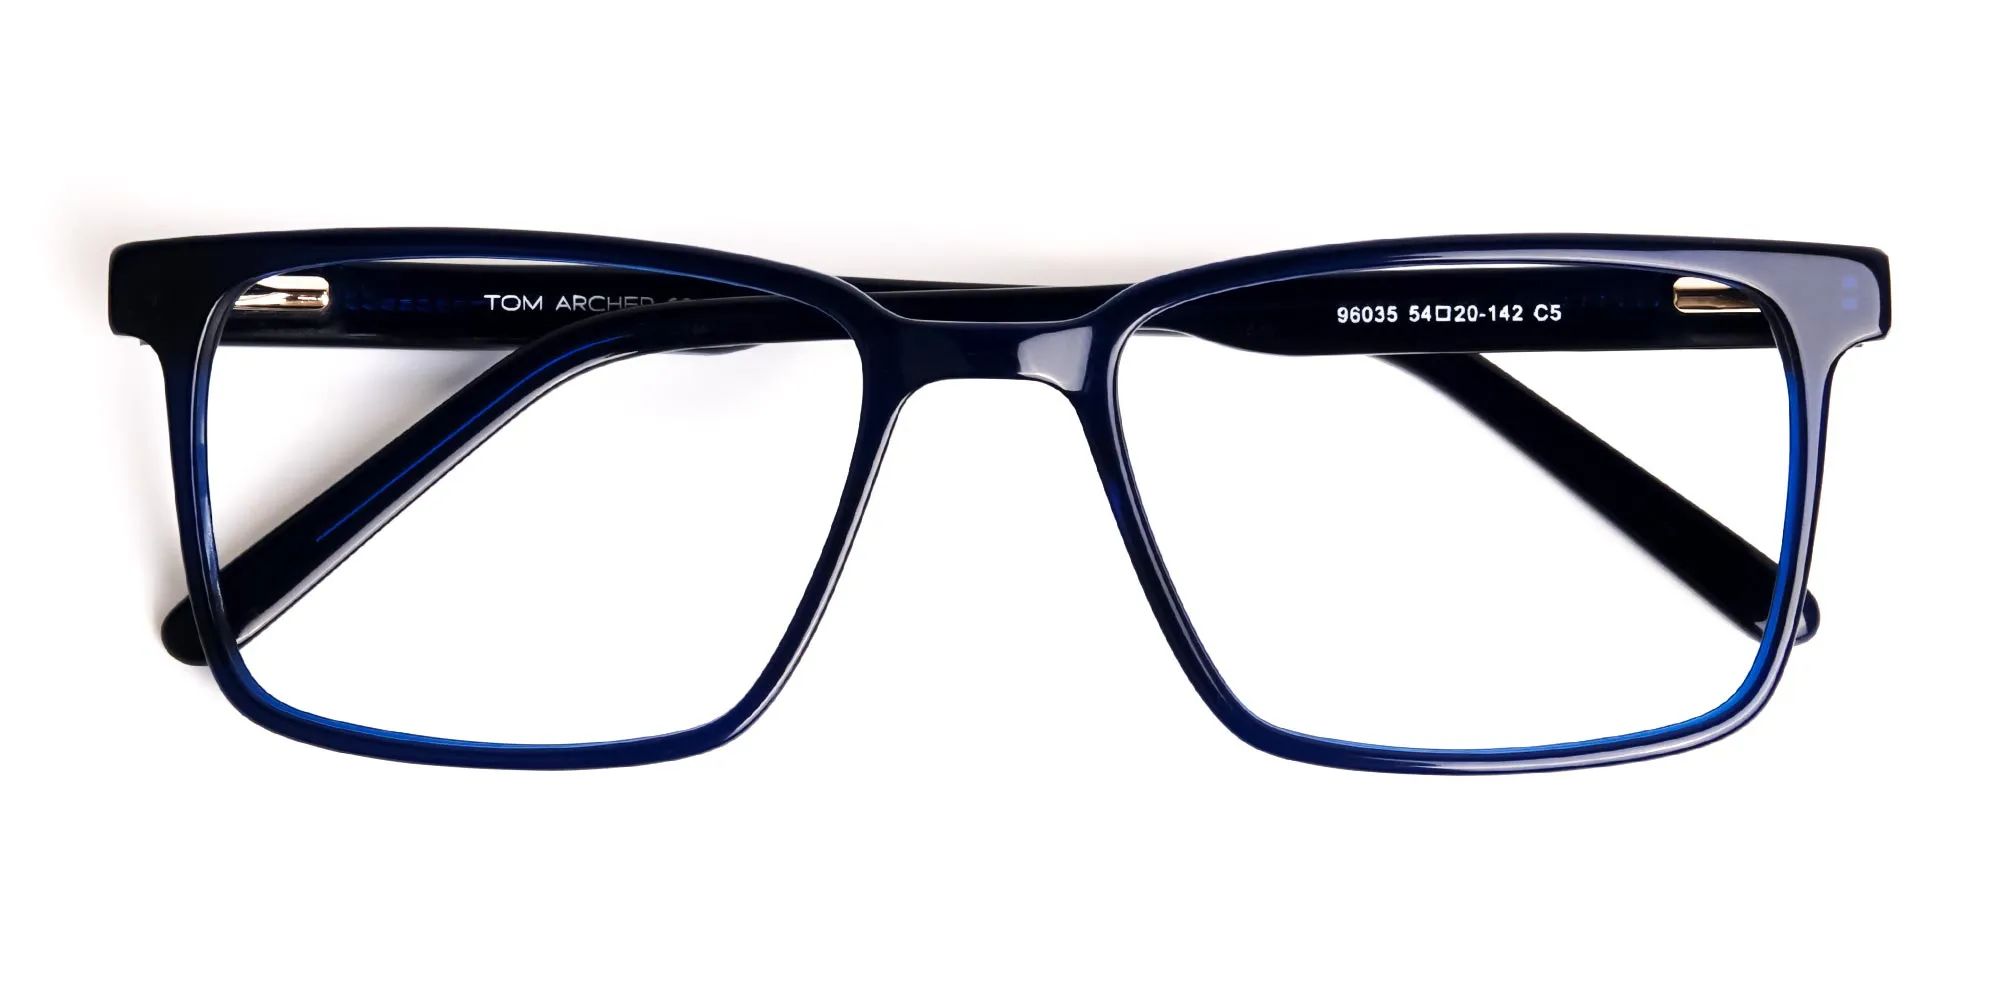 Black and Indigo Blue Rectangular Glasses frames-2